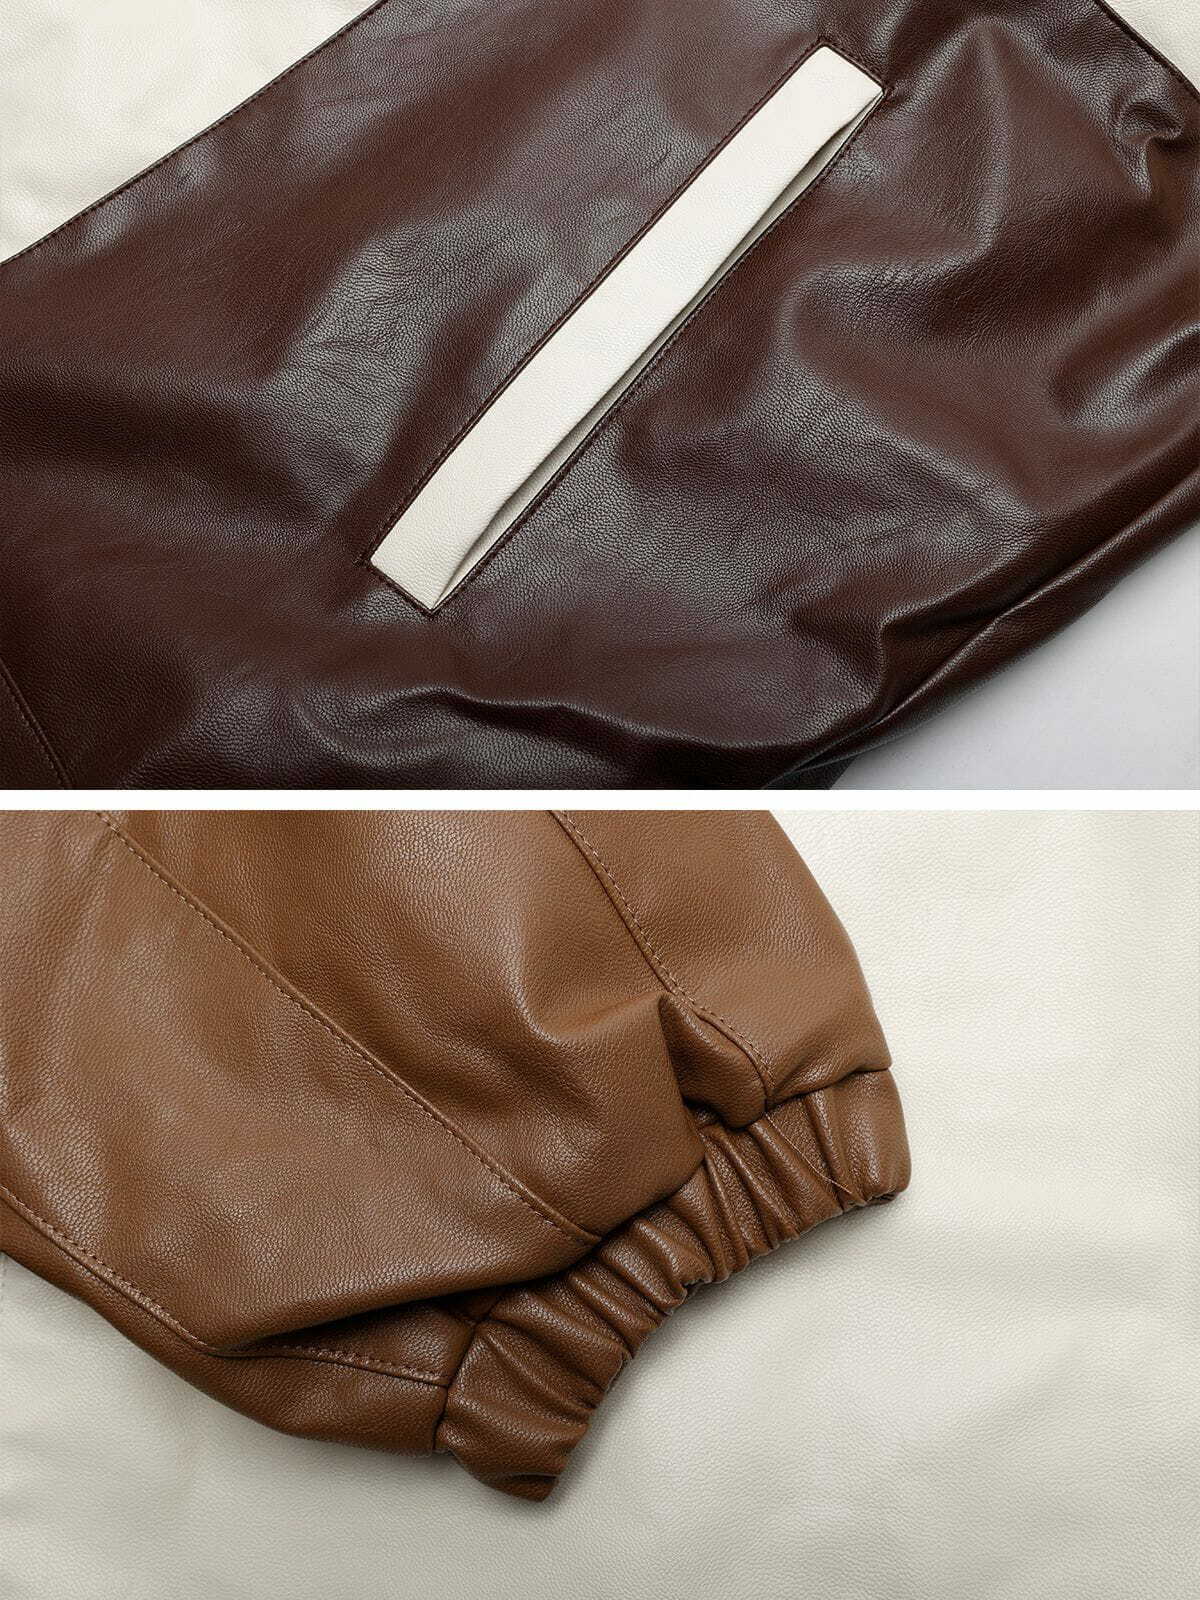 color block patchwork leather jacket 1965